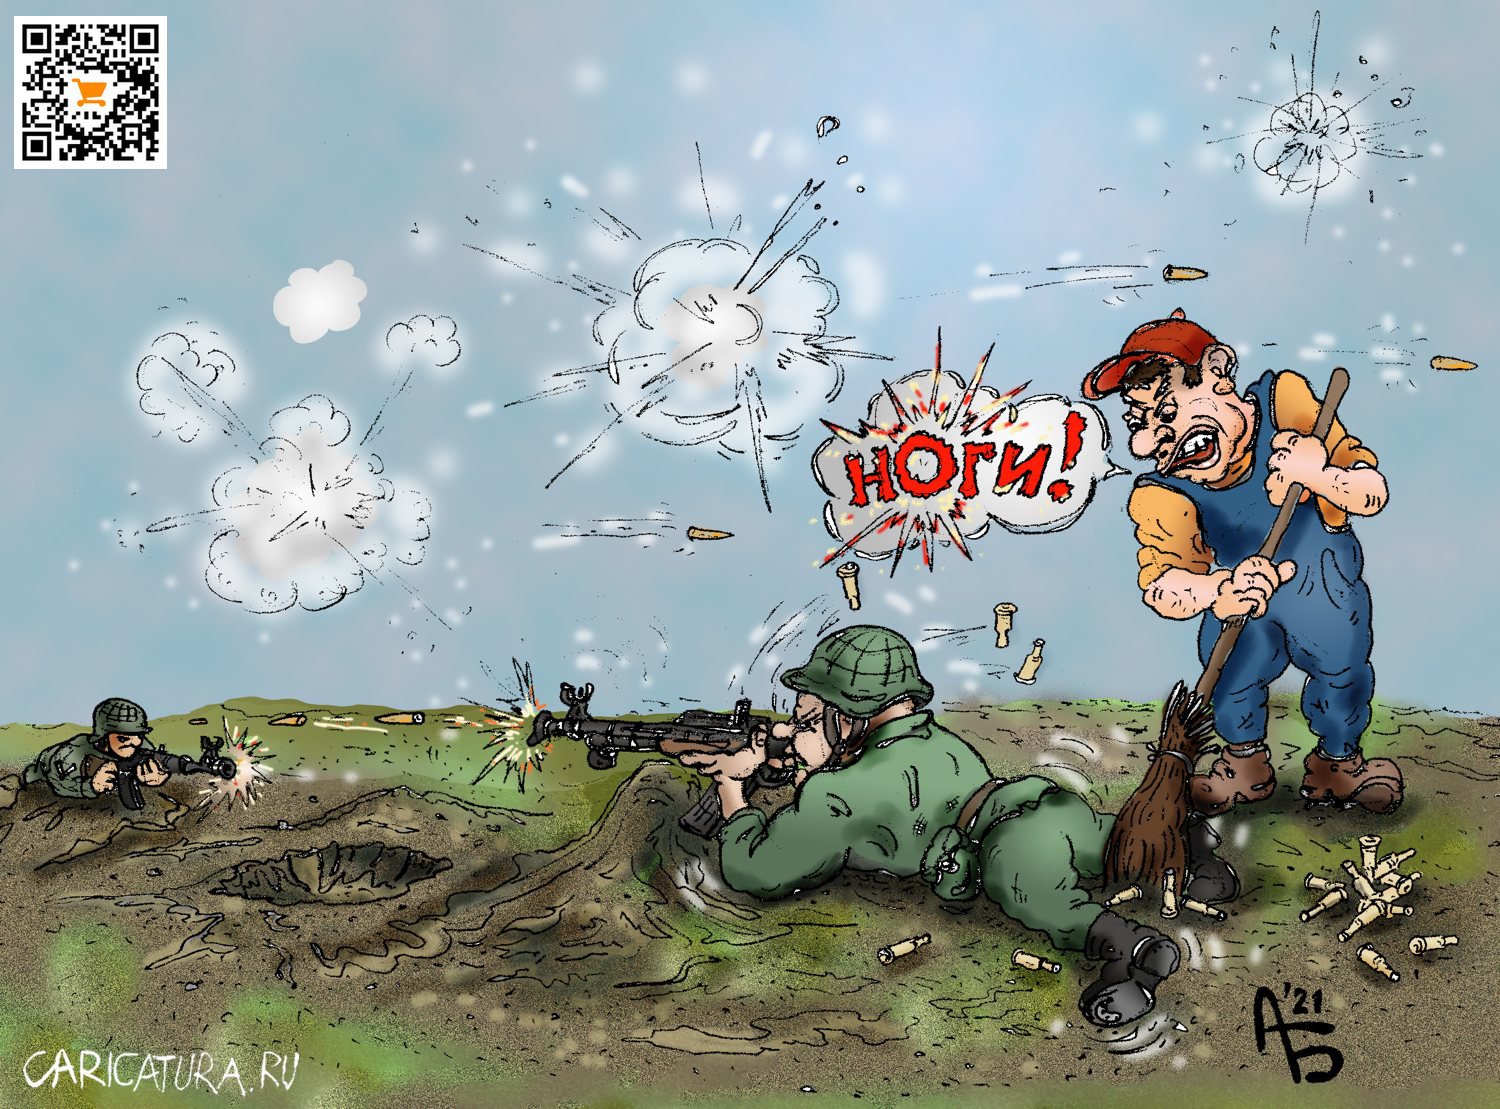 Карикатура "Война и Мир", Виктор Богданов